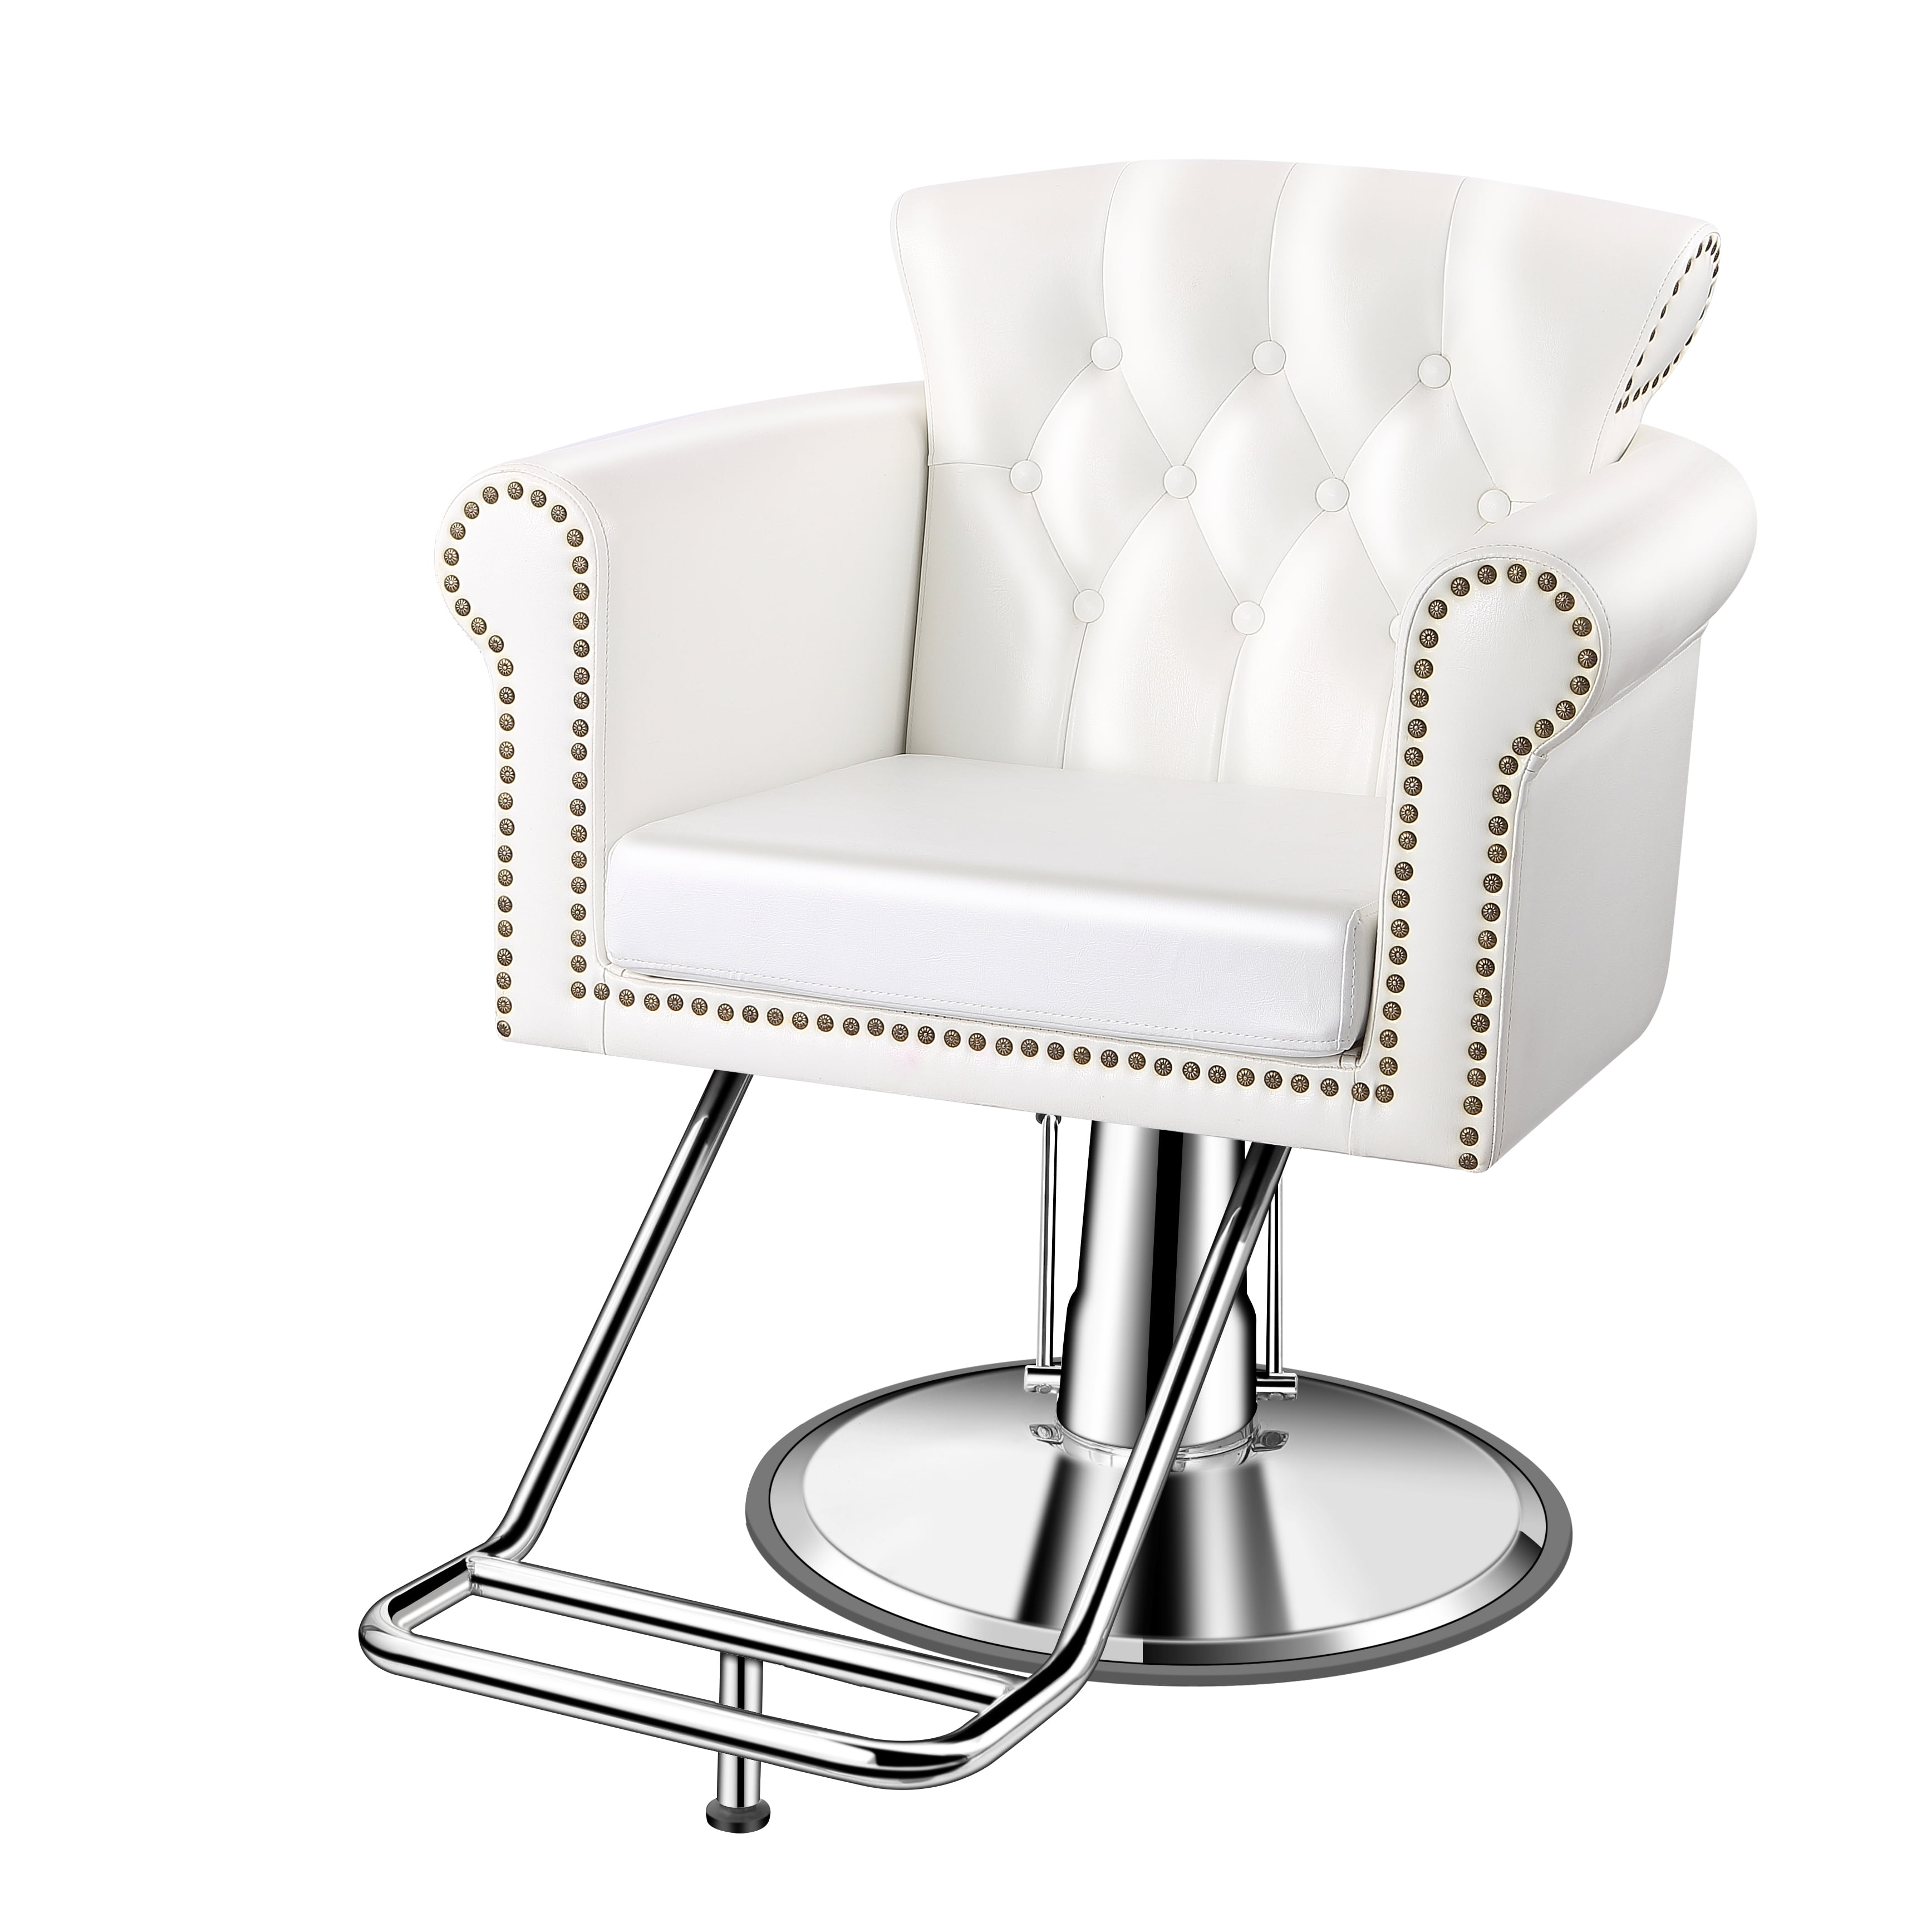 Baasha Luxury White Salon Chairs For Hair Stylist ...